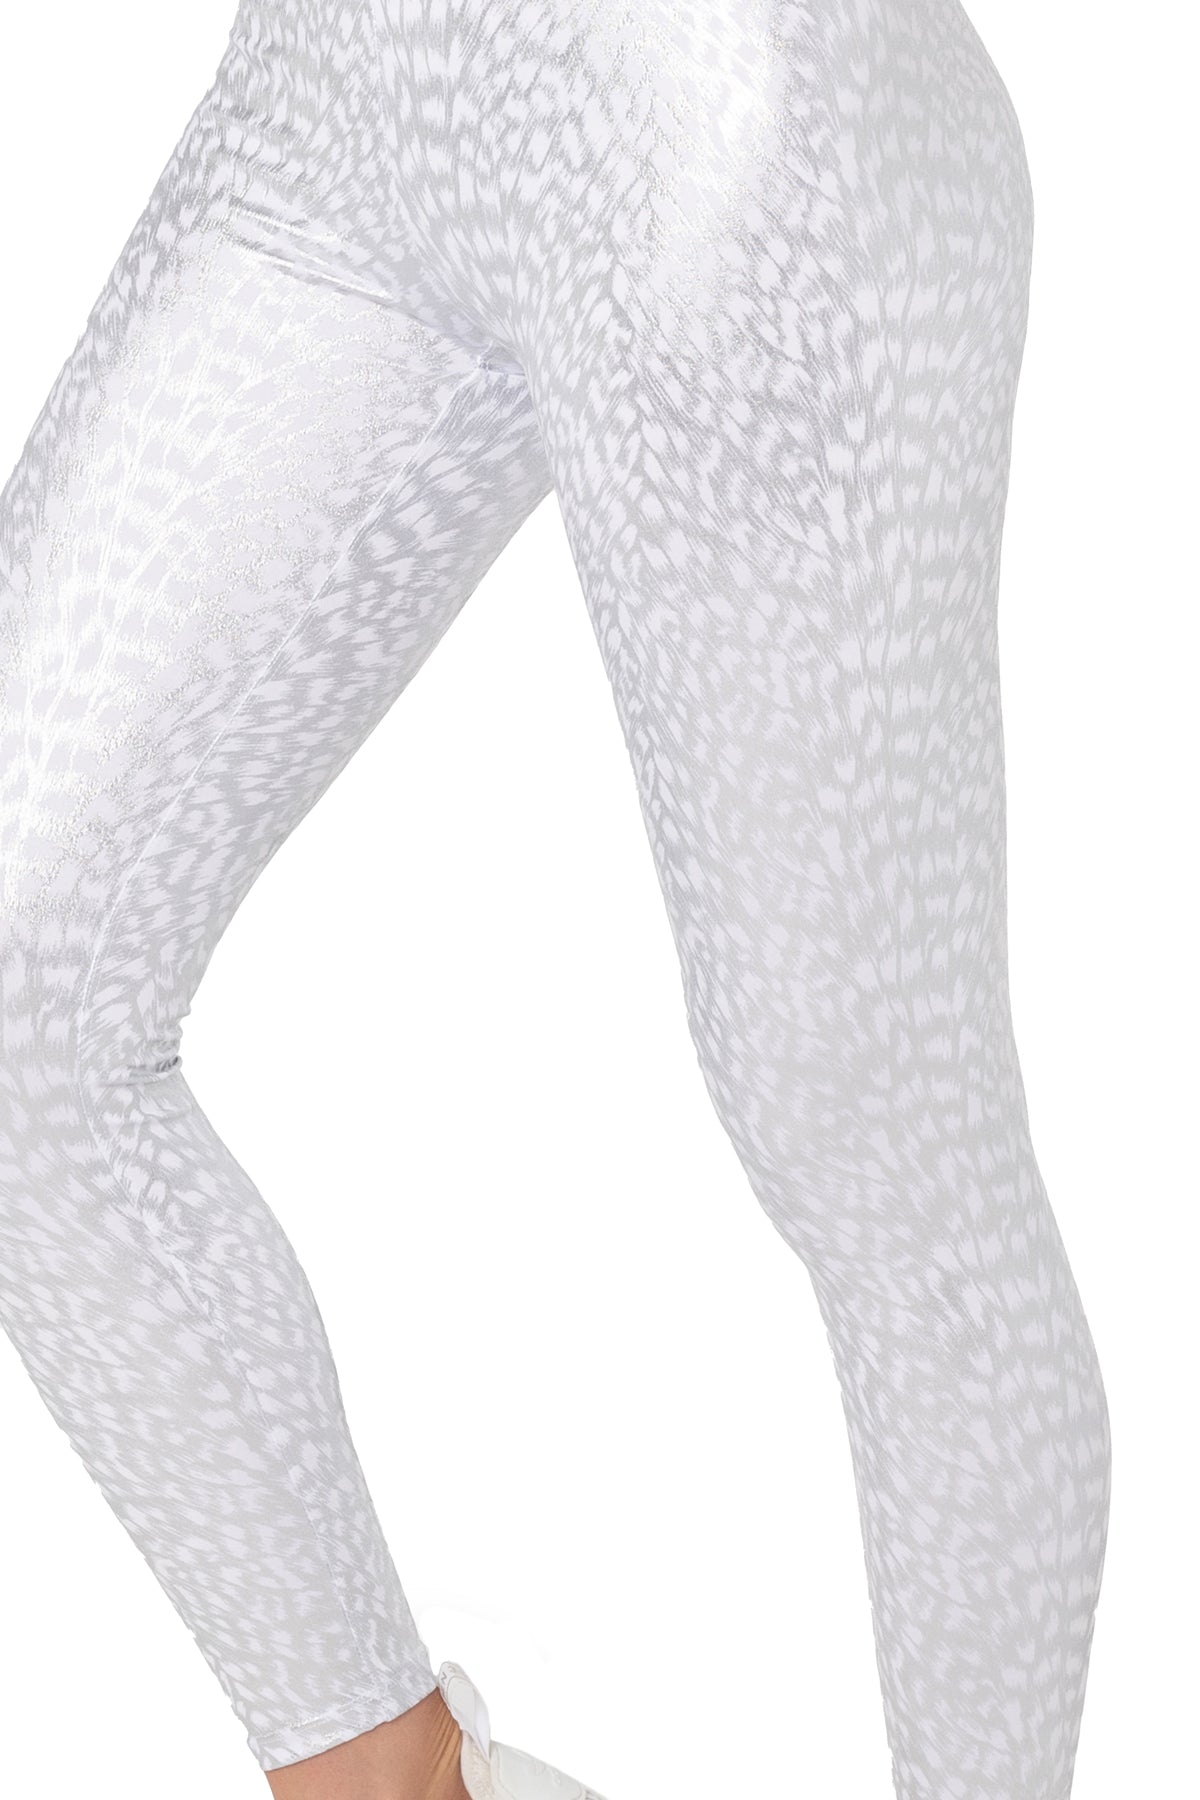 NWT KYODAN Size S Black/Silver Glitter Leggings Side Mesh Inserts $68